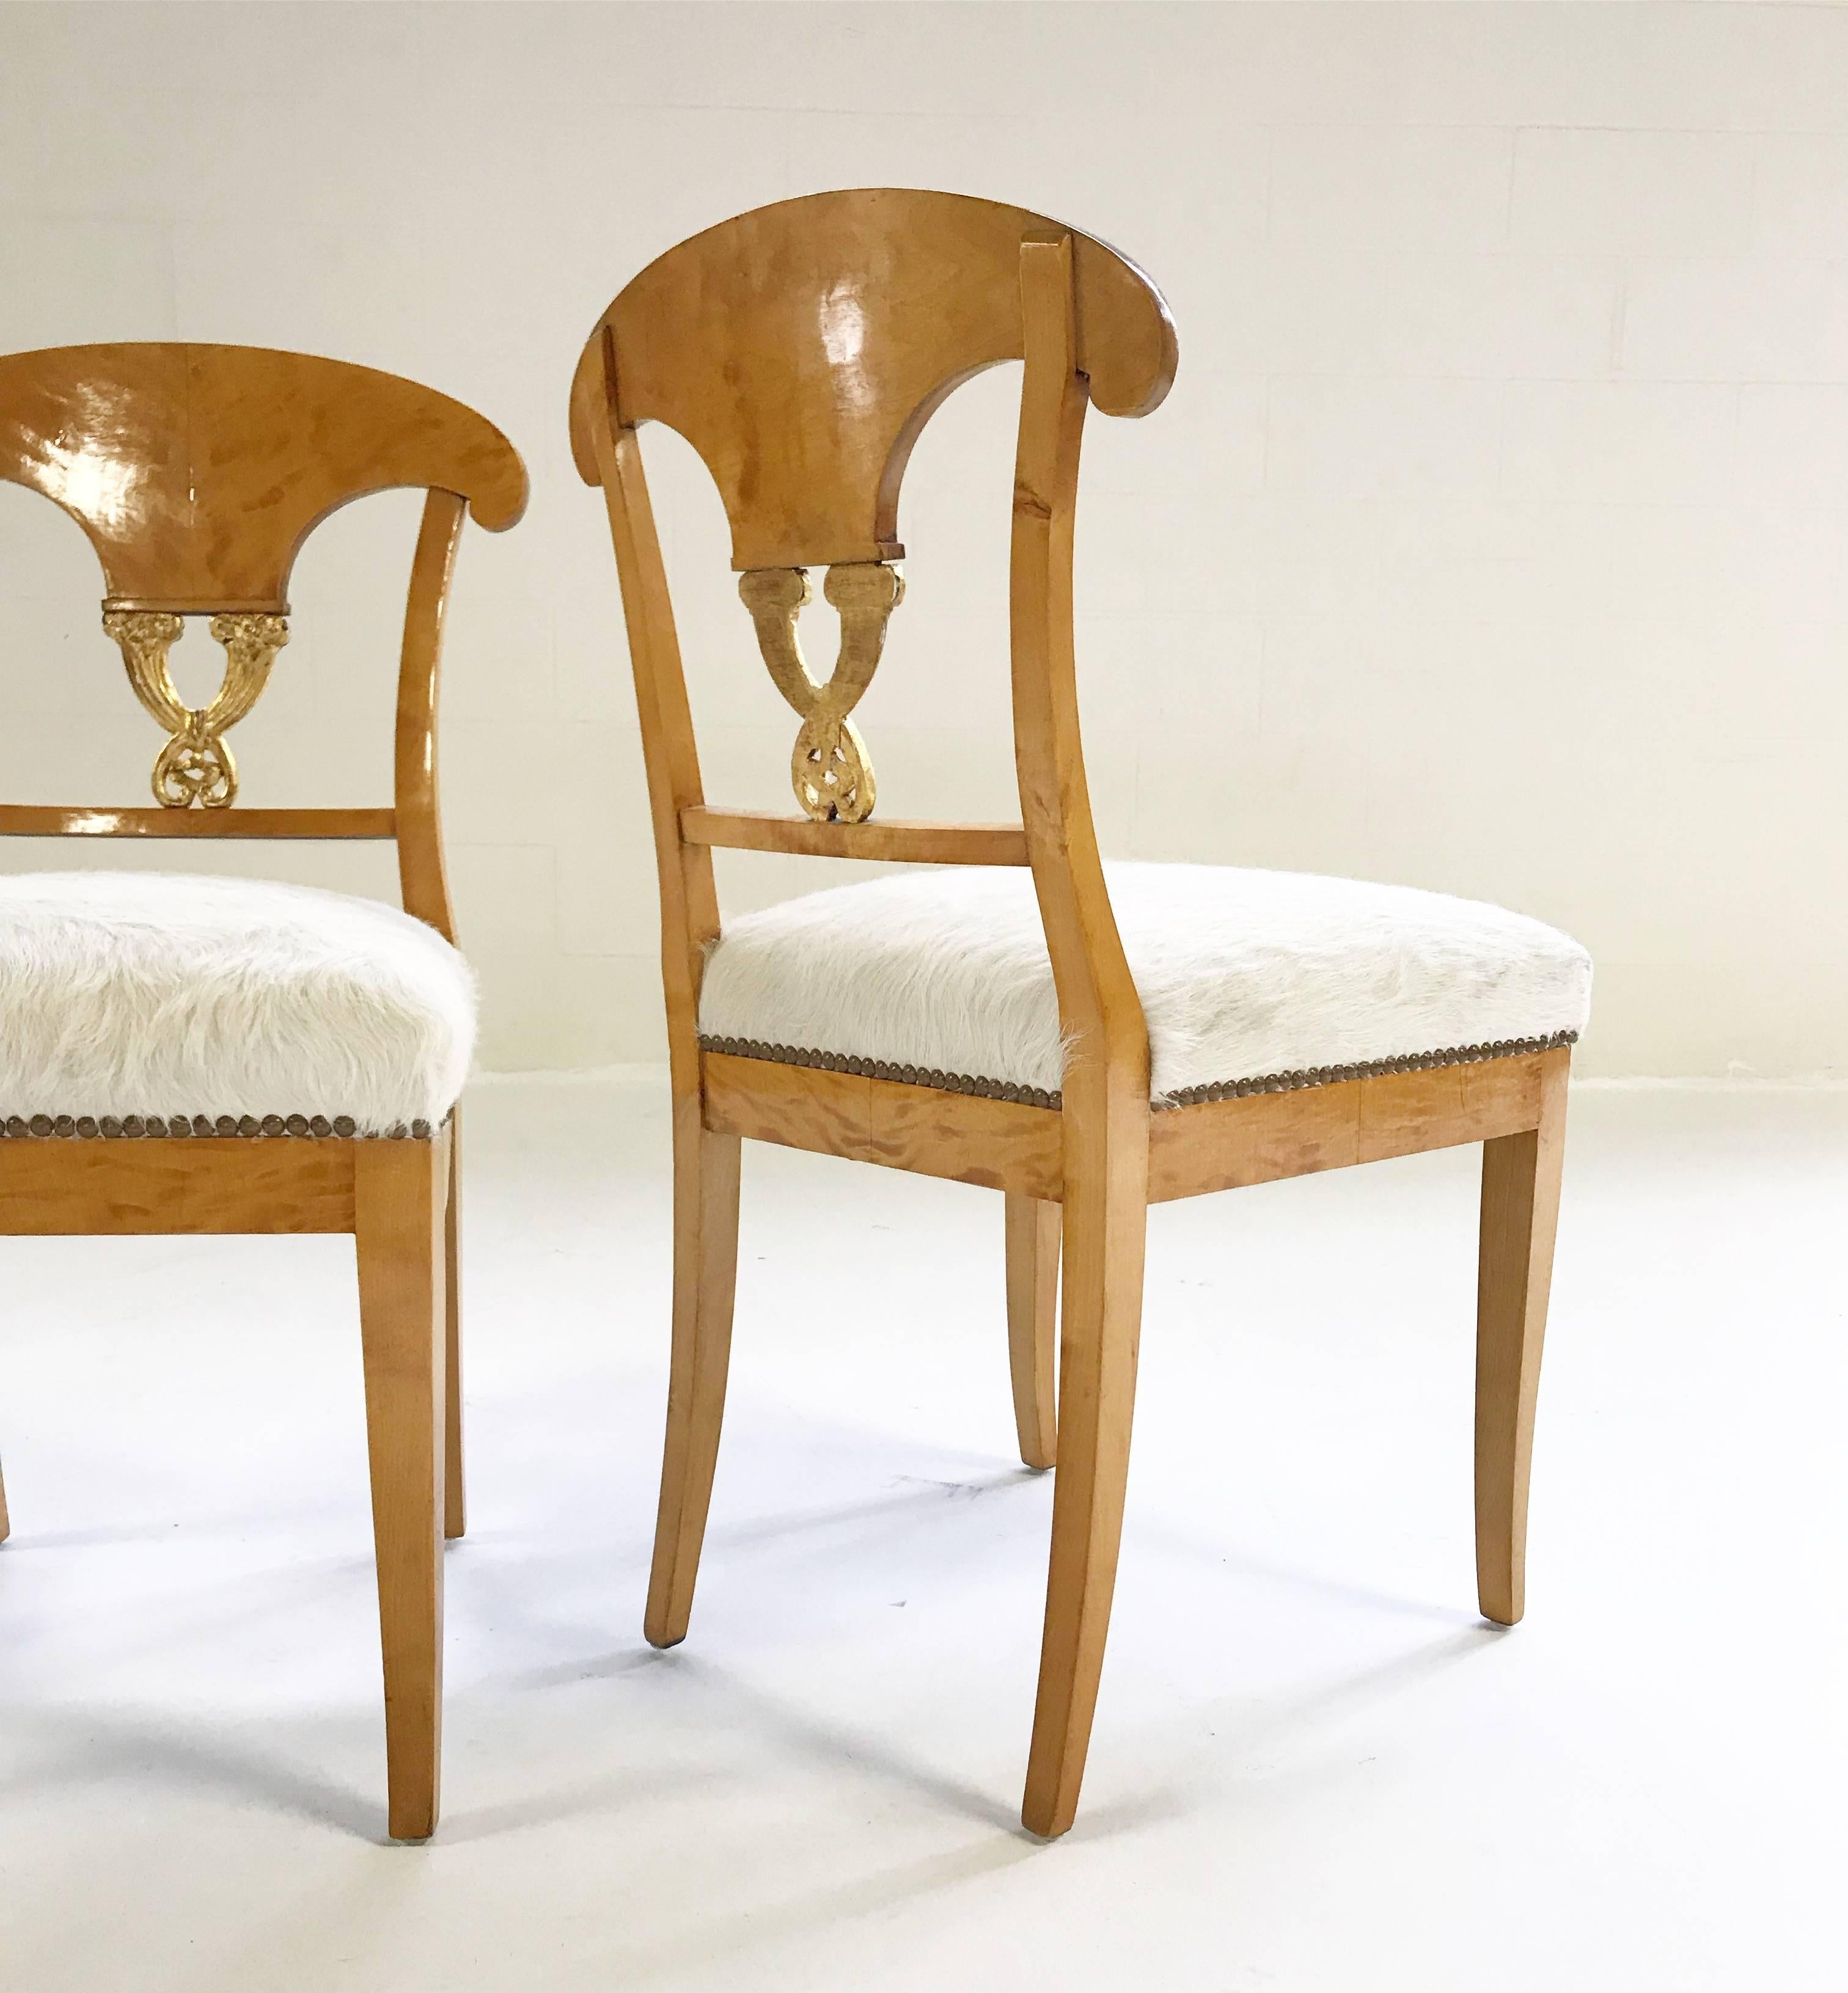 Early 19th Century Pair of Satin Birch Biedermeier Chairs in Ivory Brazilian Cowhide, circa 1820